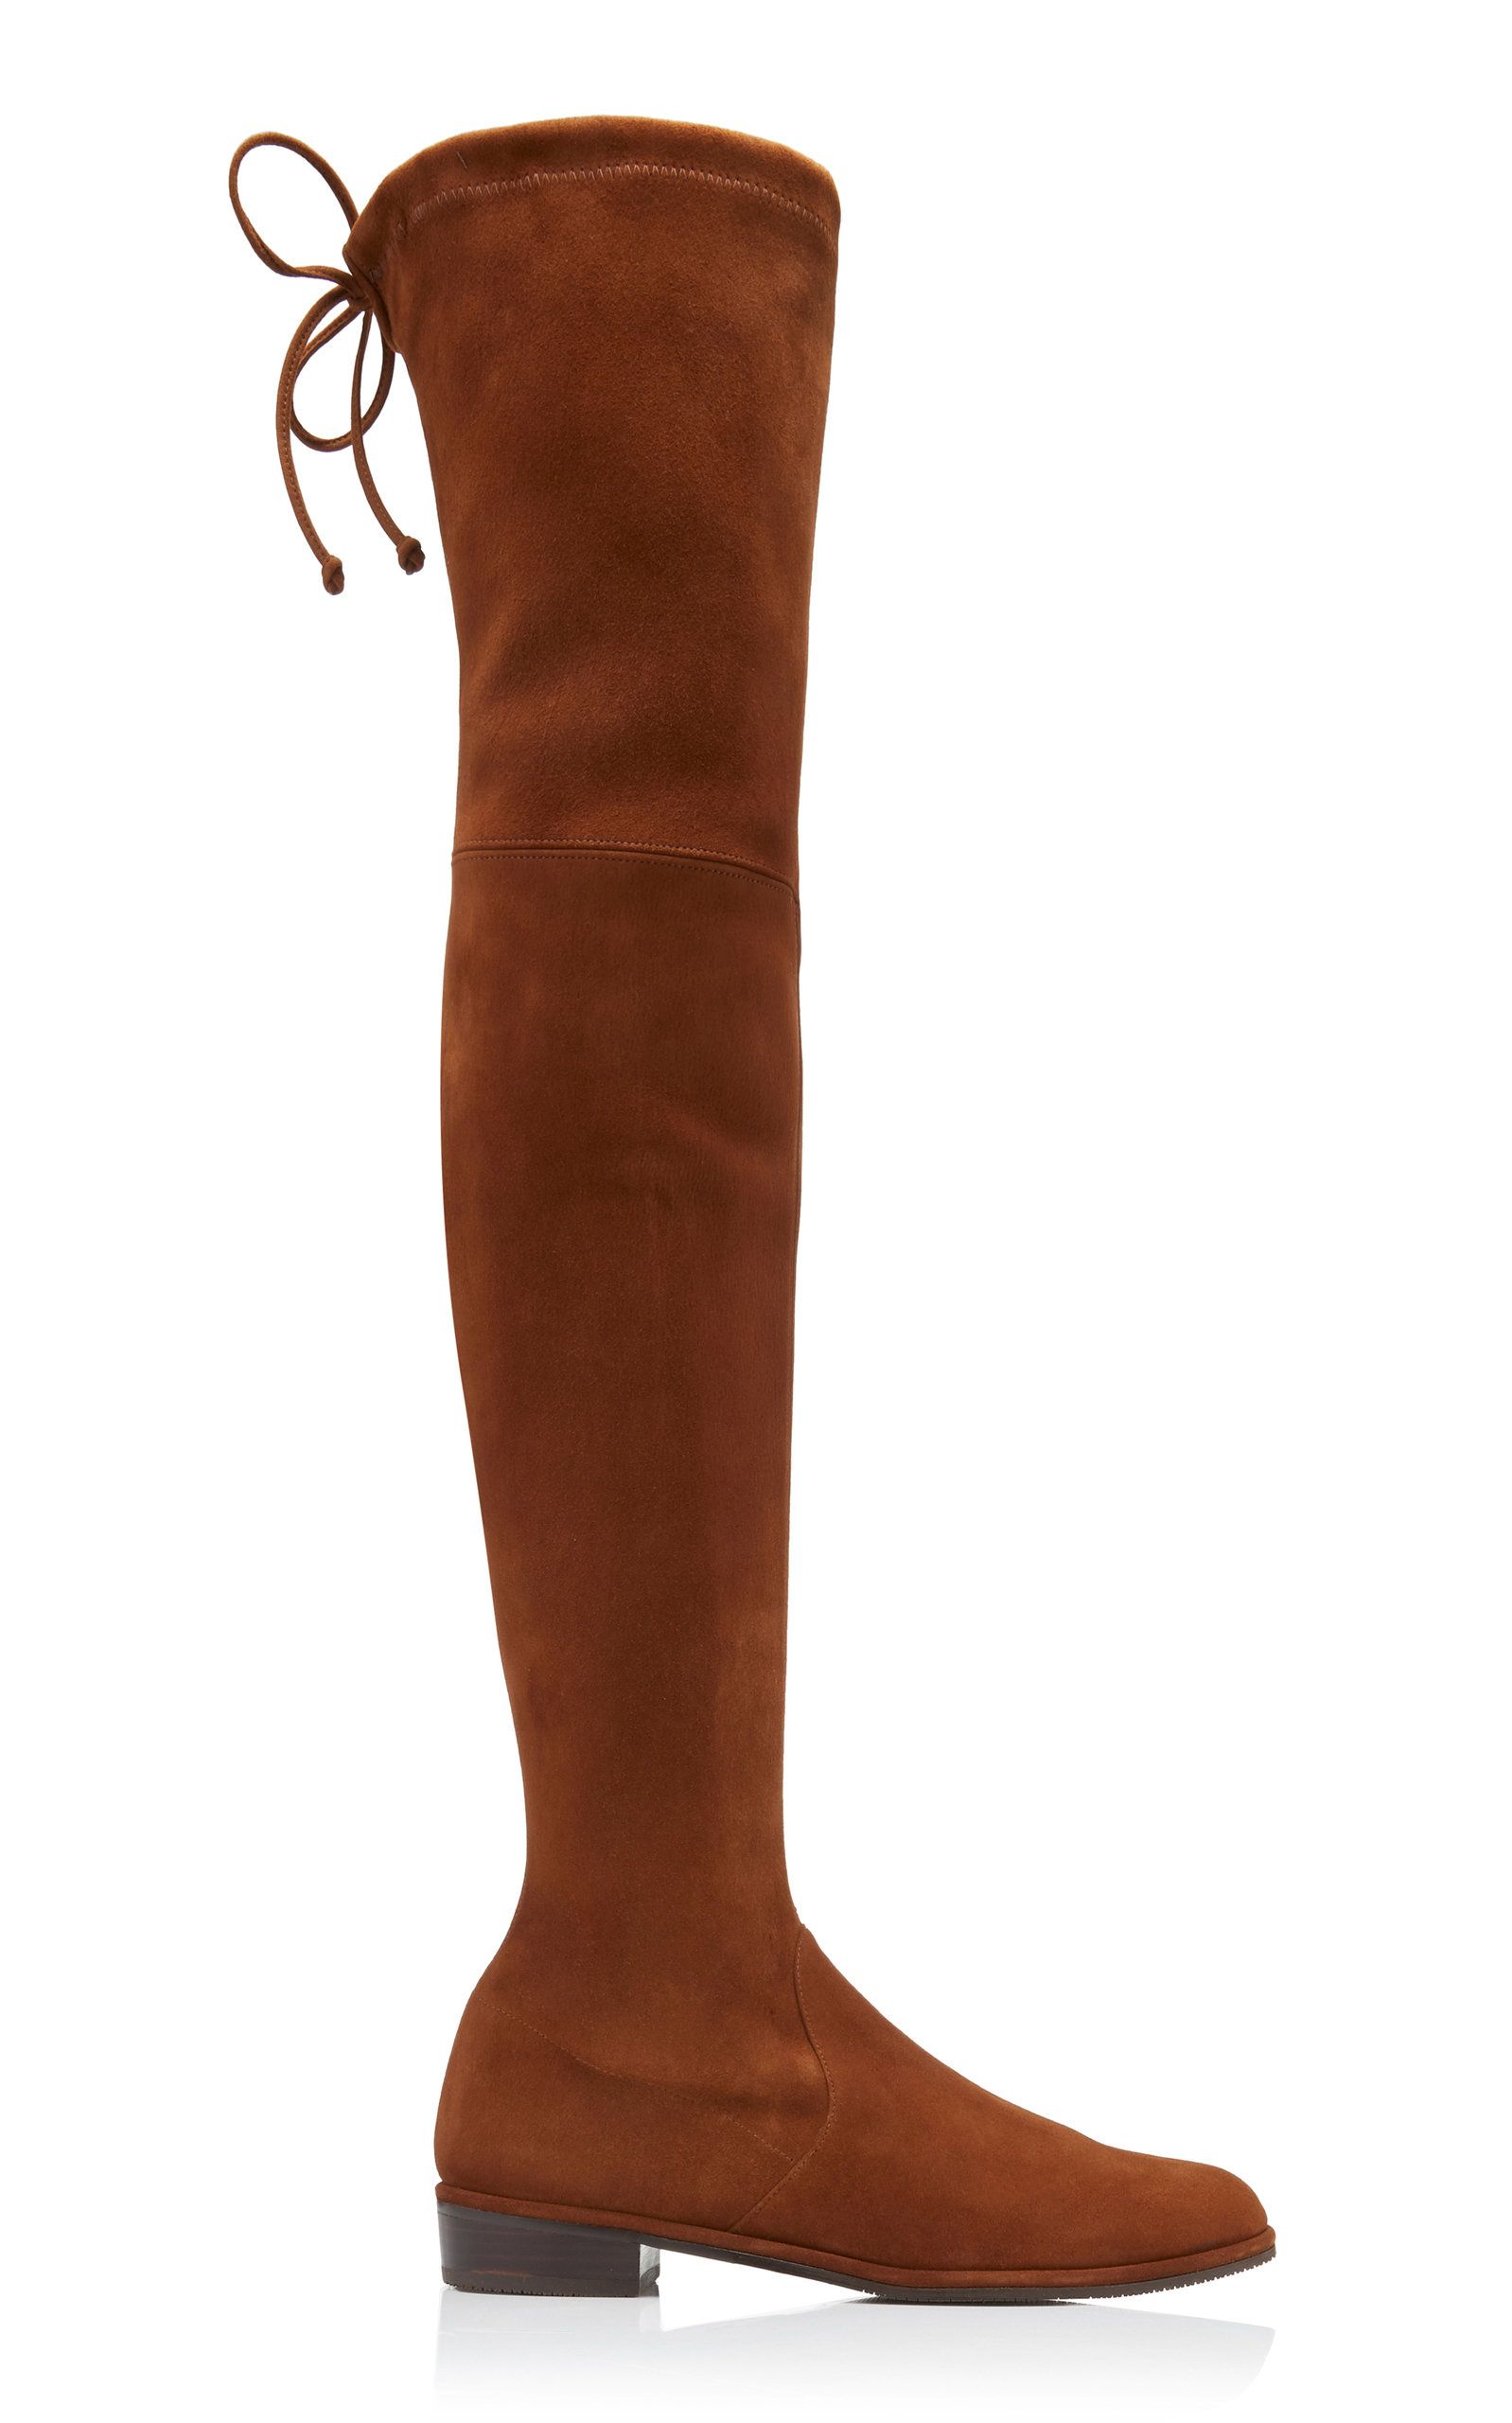 https://hips.hearstapps.com/vader-prod.s3.amazonaws.com/1590598177-large_stuart-weitzman--2-brown-lowland-over-the-knee-suede-boots.jpg